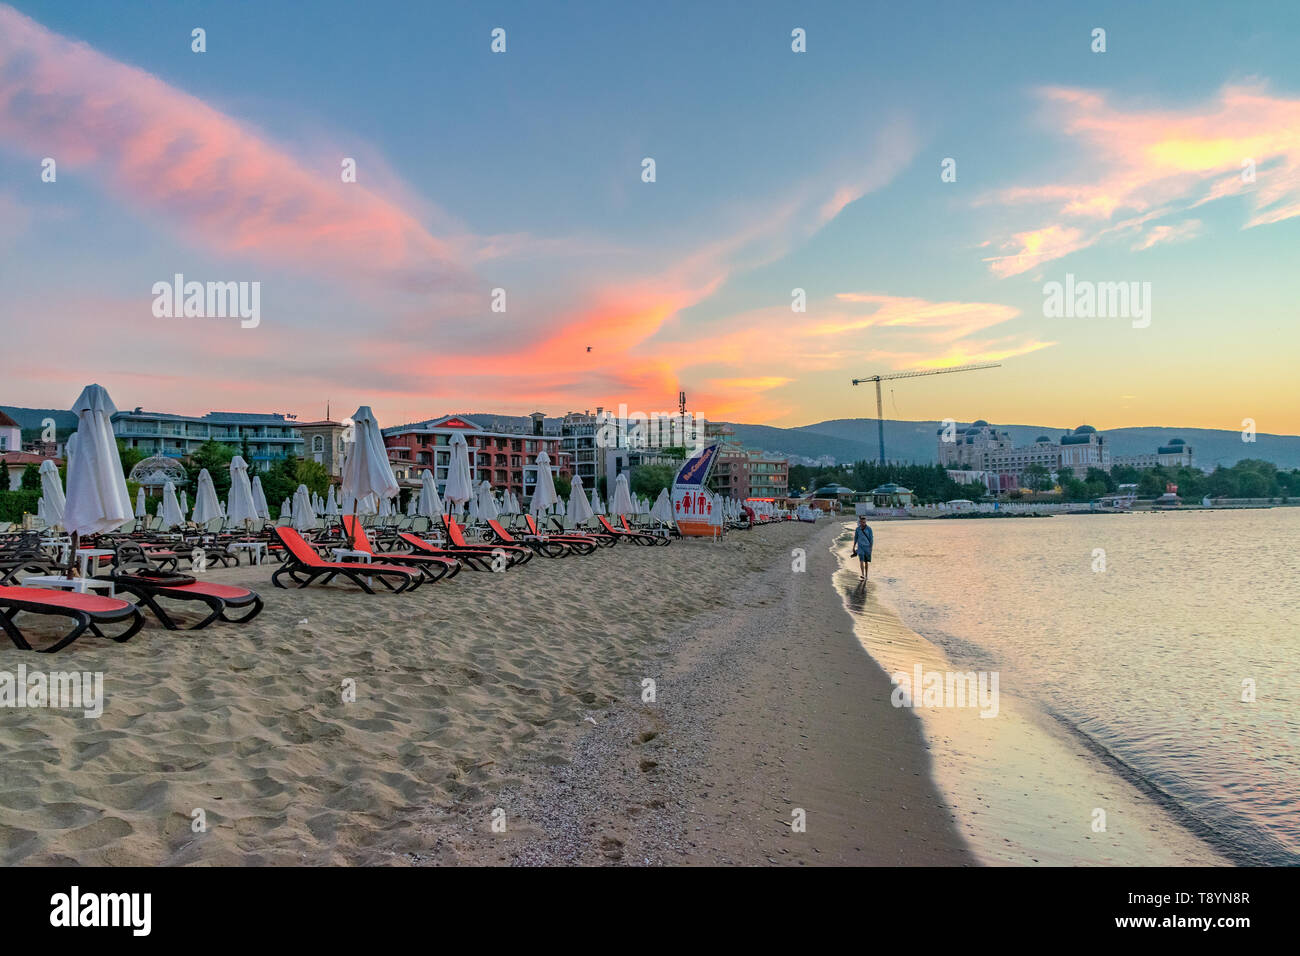 Sunny Beach, Bulgaria - 4 Sep 2018: Sunny Beach coastline at sunrise, a major seaside resort on the Black Sea coast of Bulgaria. Stock Photo